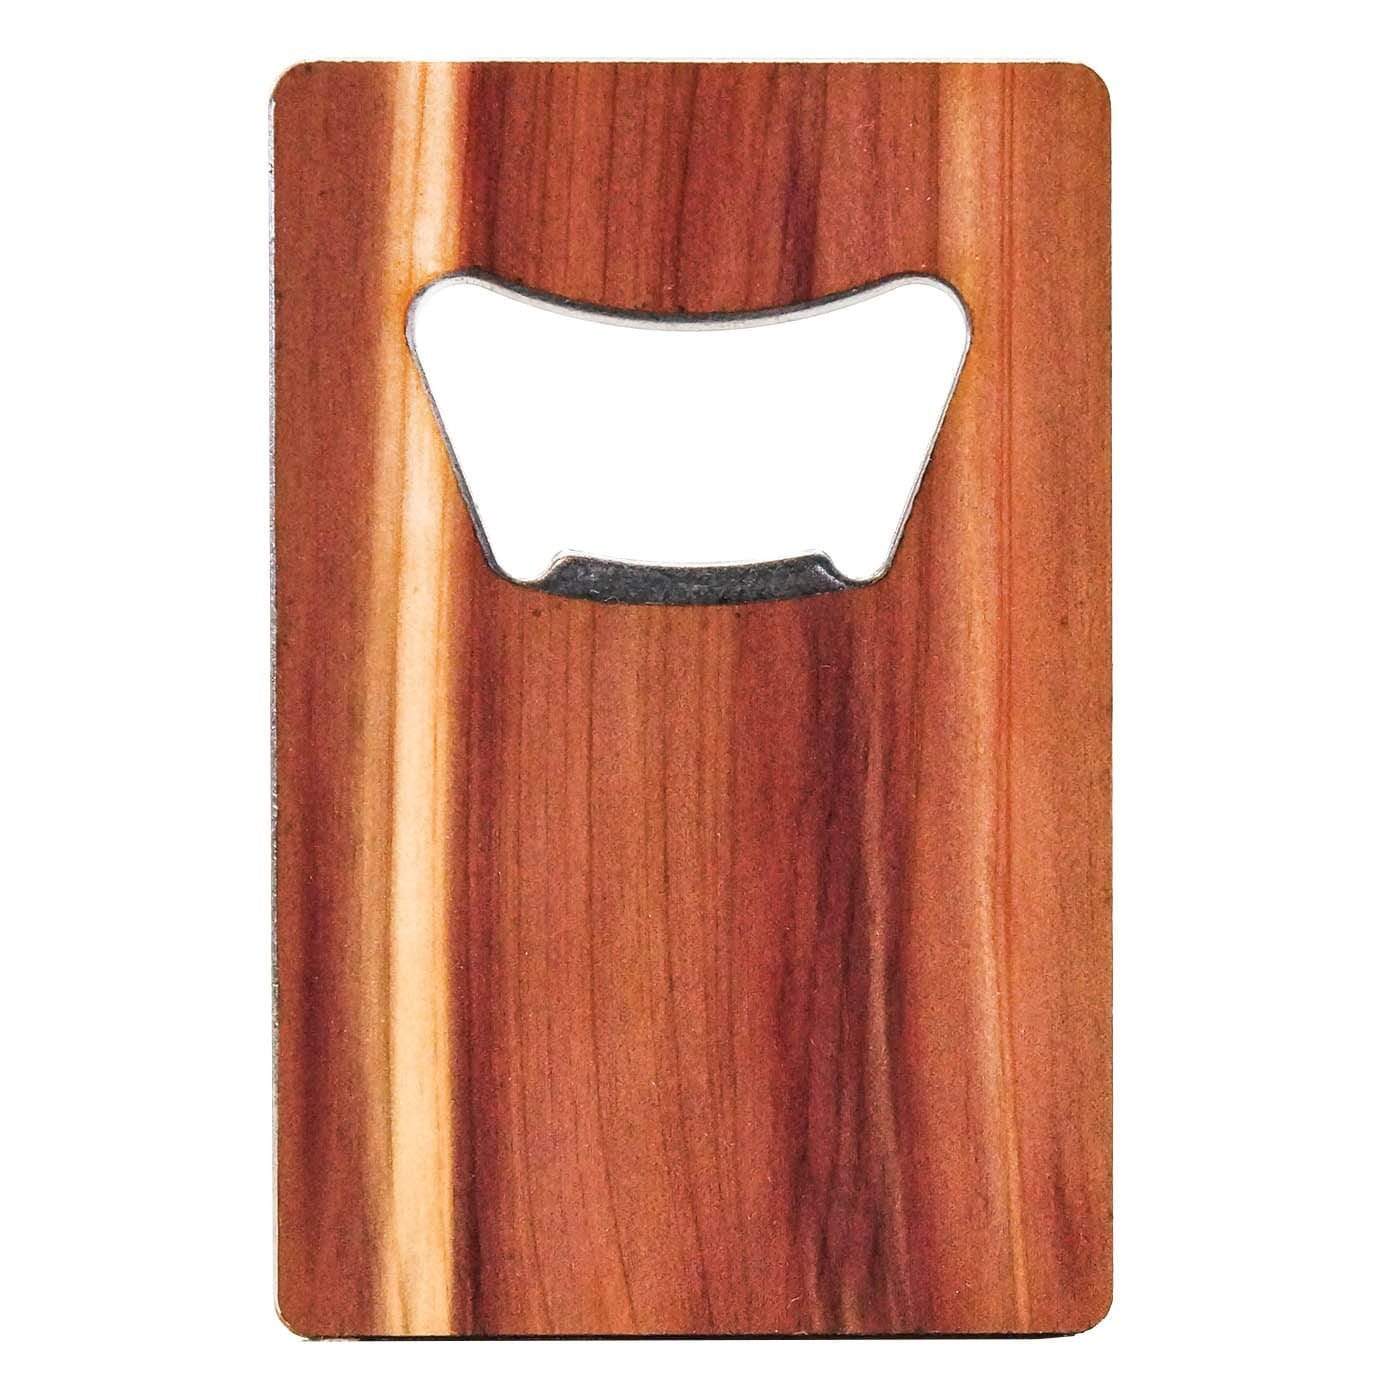 Cedar Custom Wood Credit Card Bottle Opener